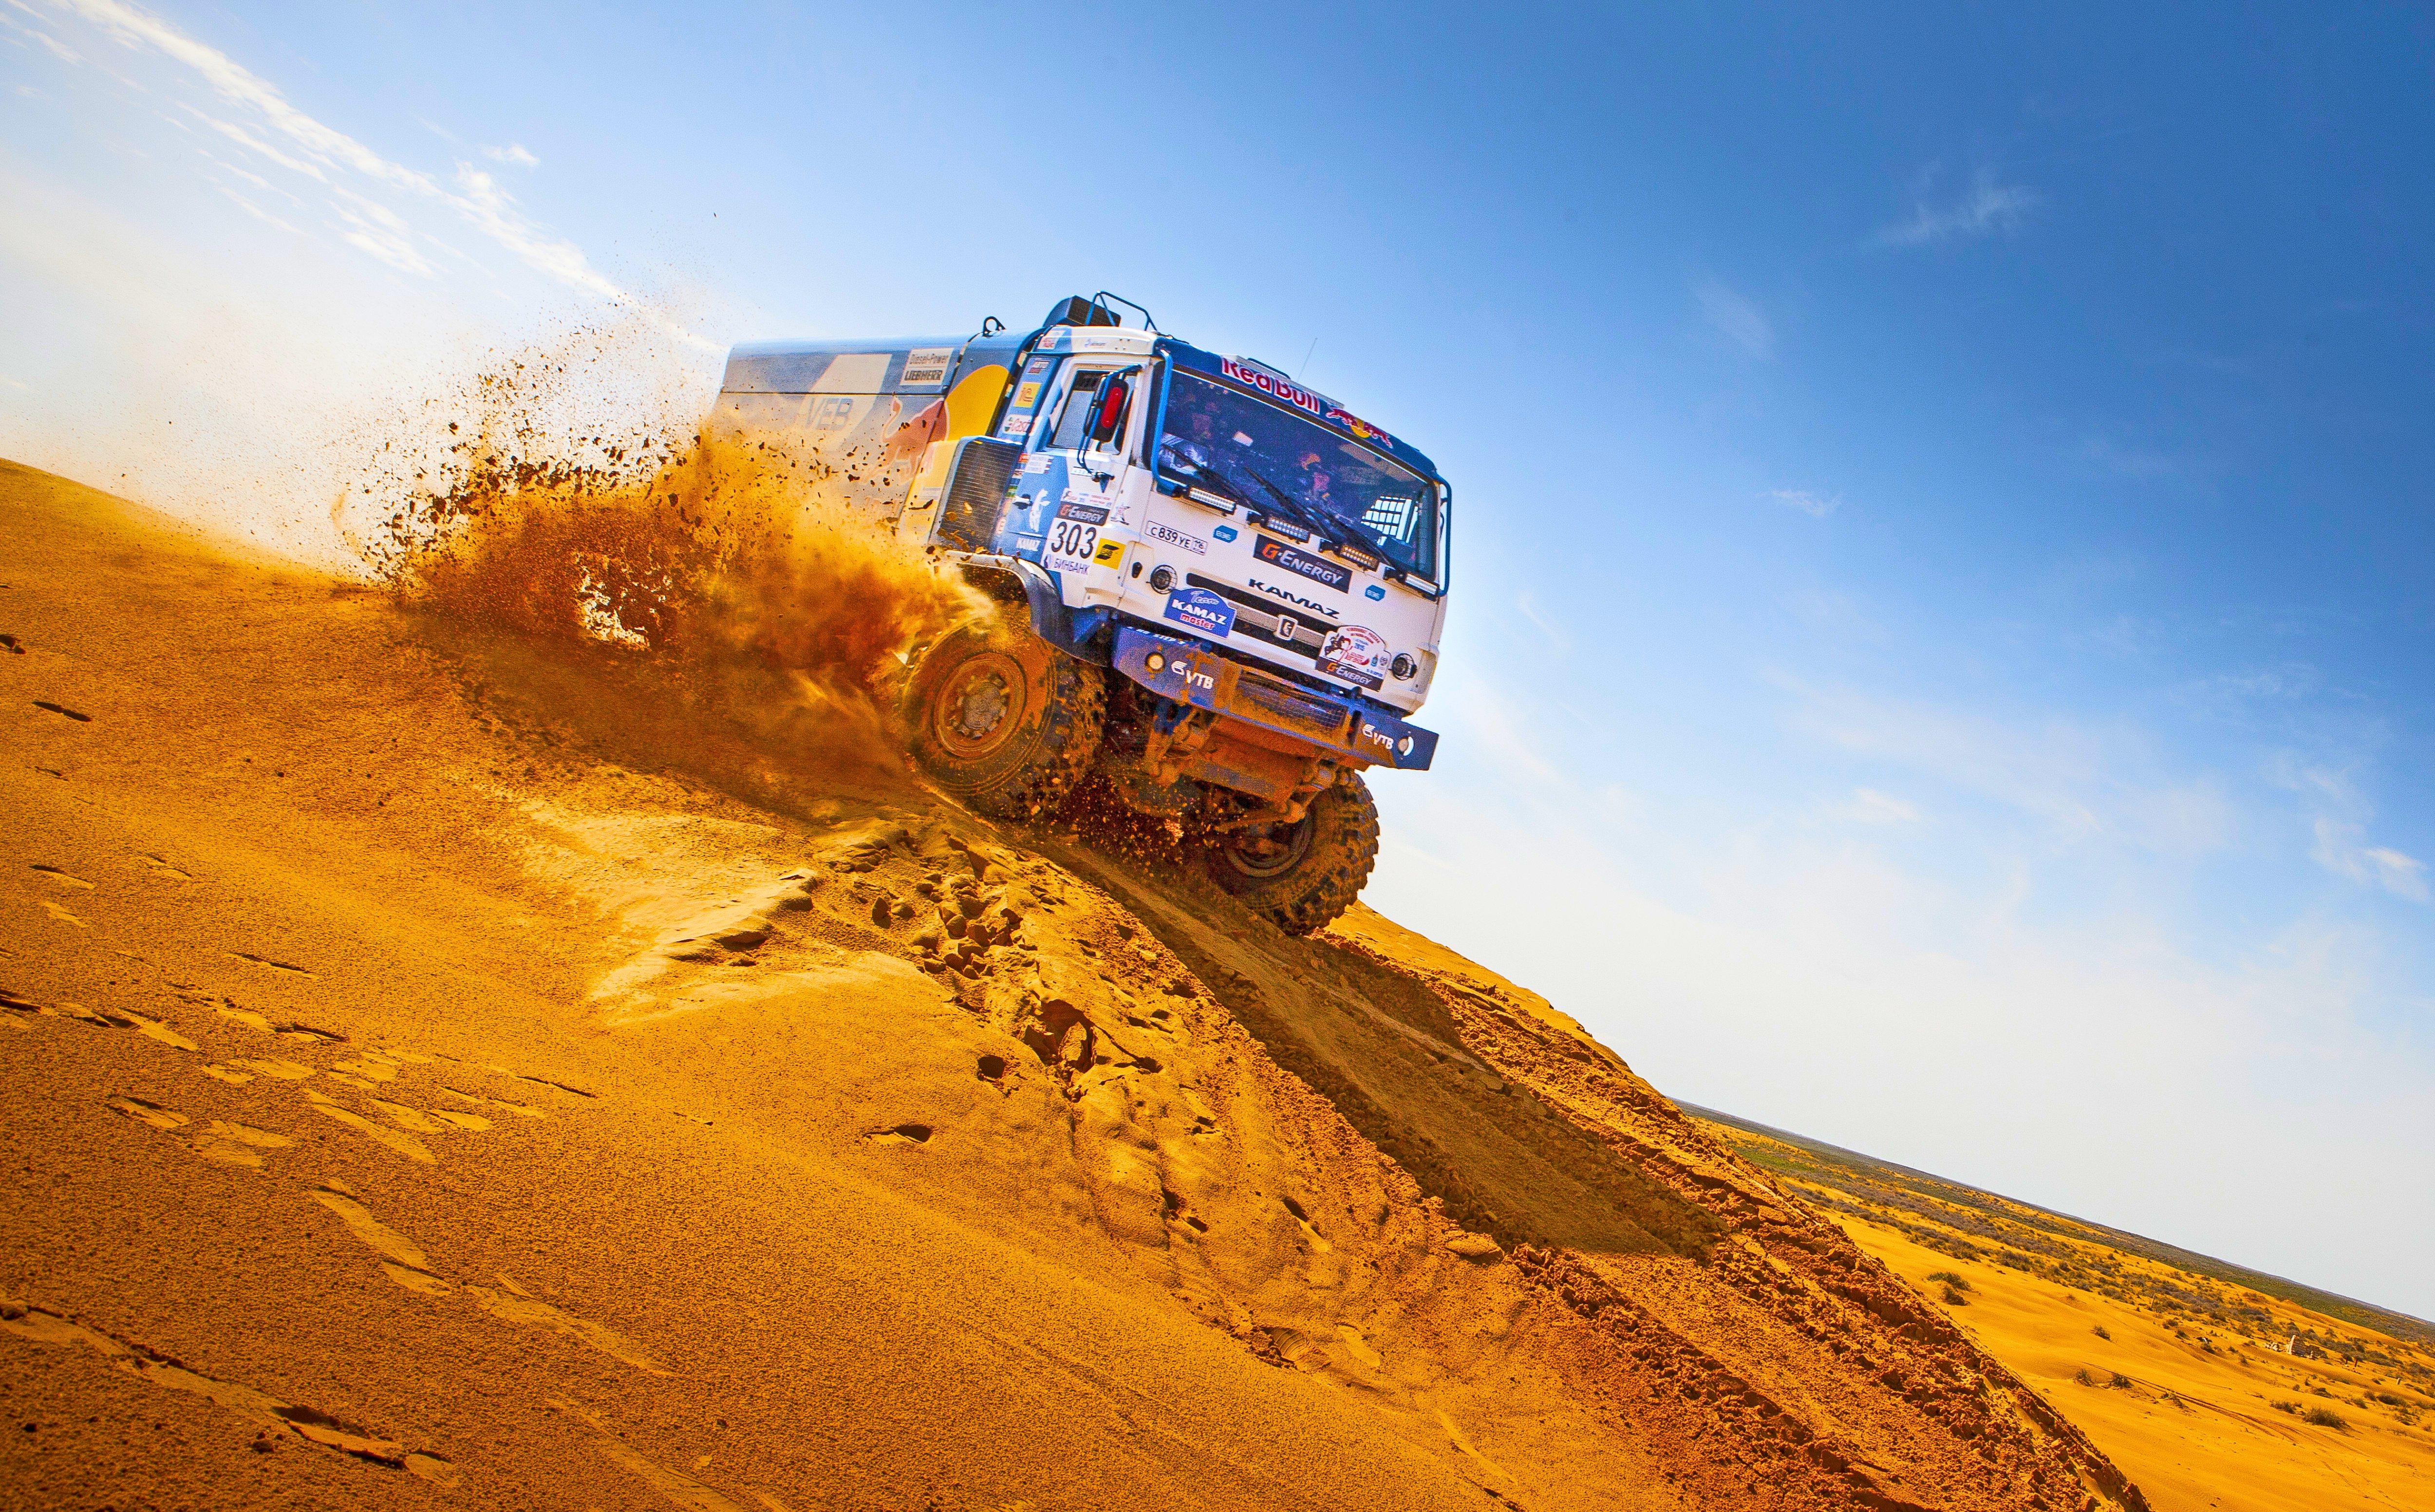 Kamaz Sand Rally Truck Dirt Vehicle Racing 5000x3105